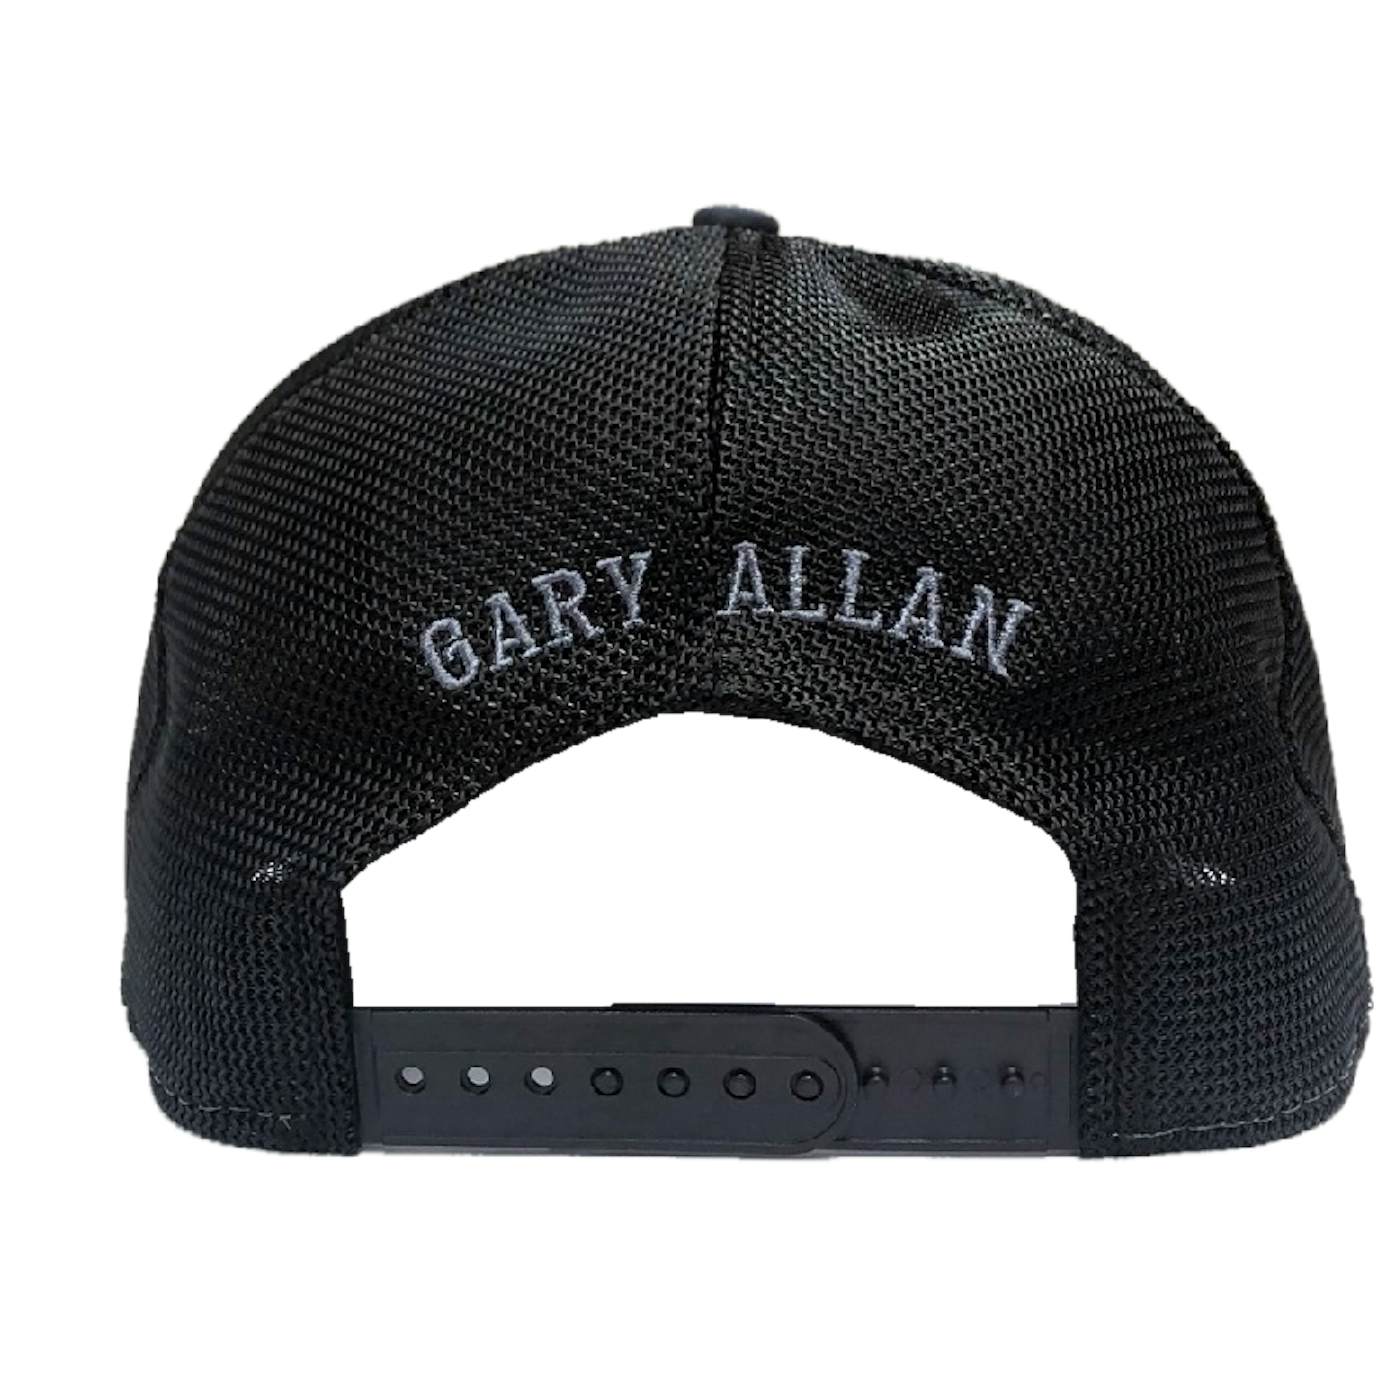 Gary Allan Charcoal and Black Ballcap